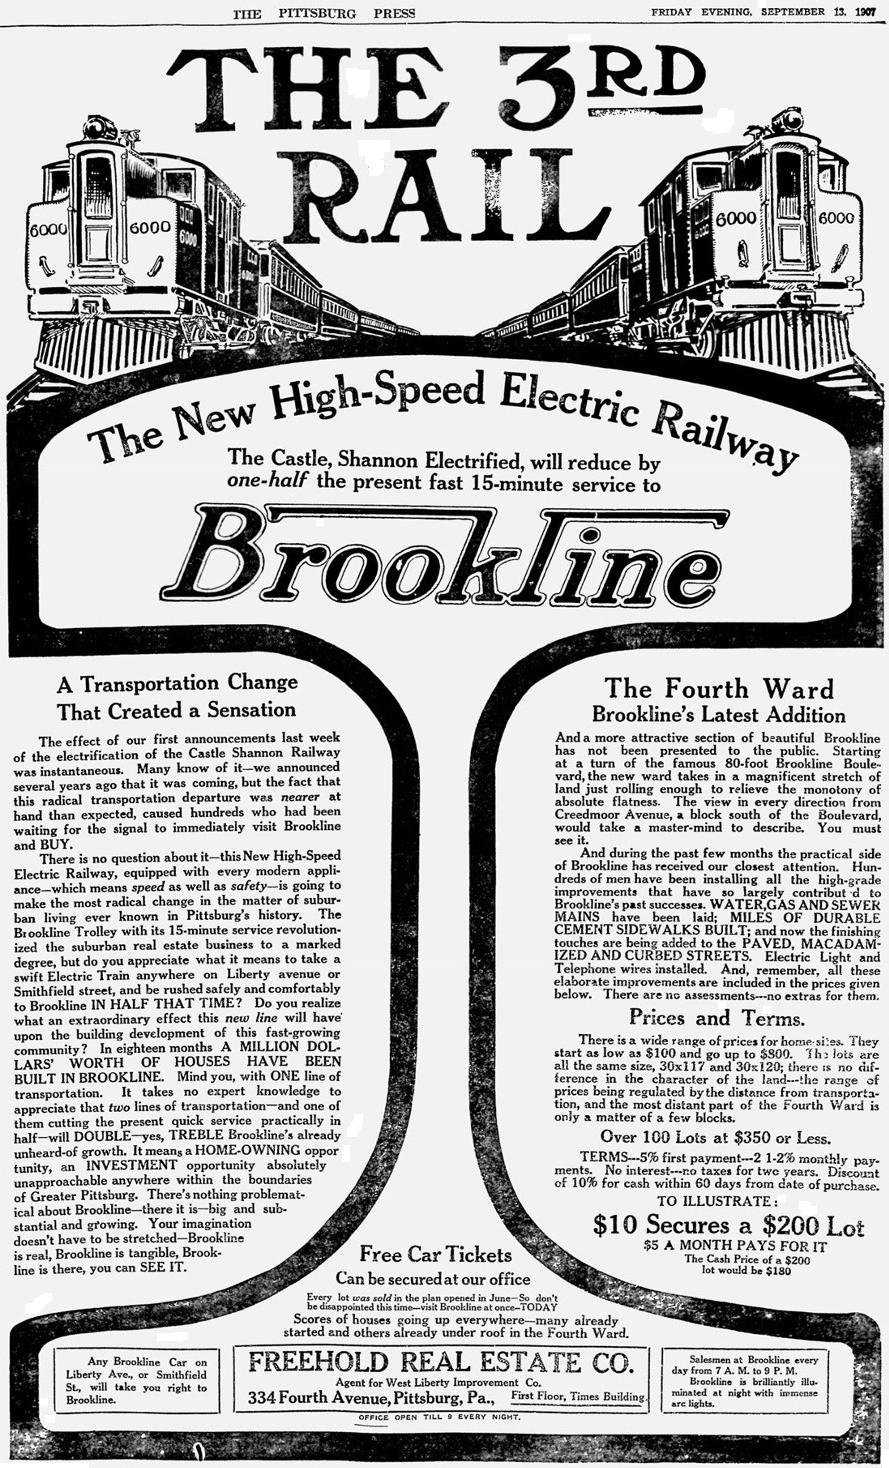 Real Estate Advertisement - September 13, 1907.